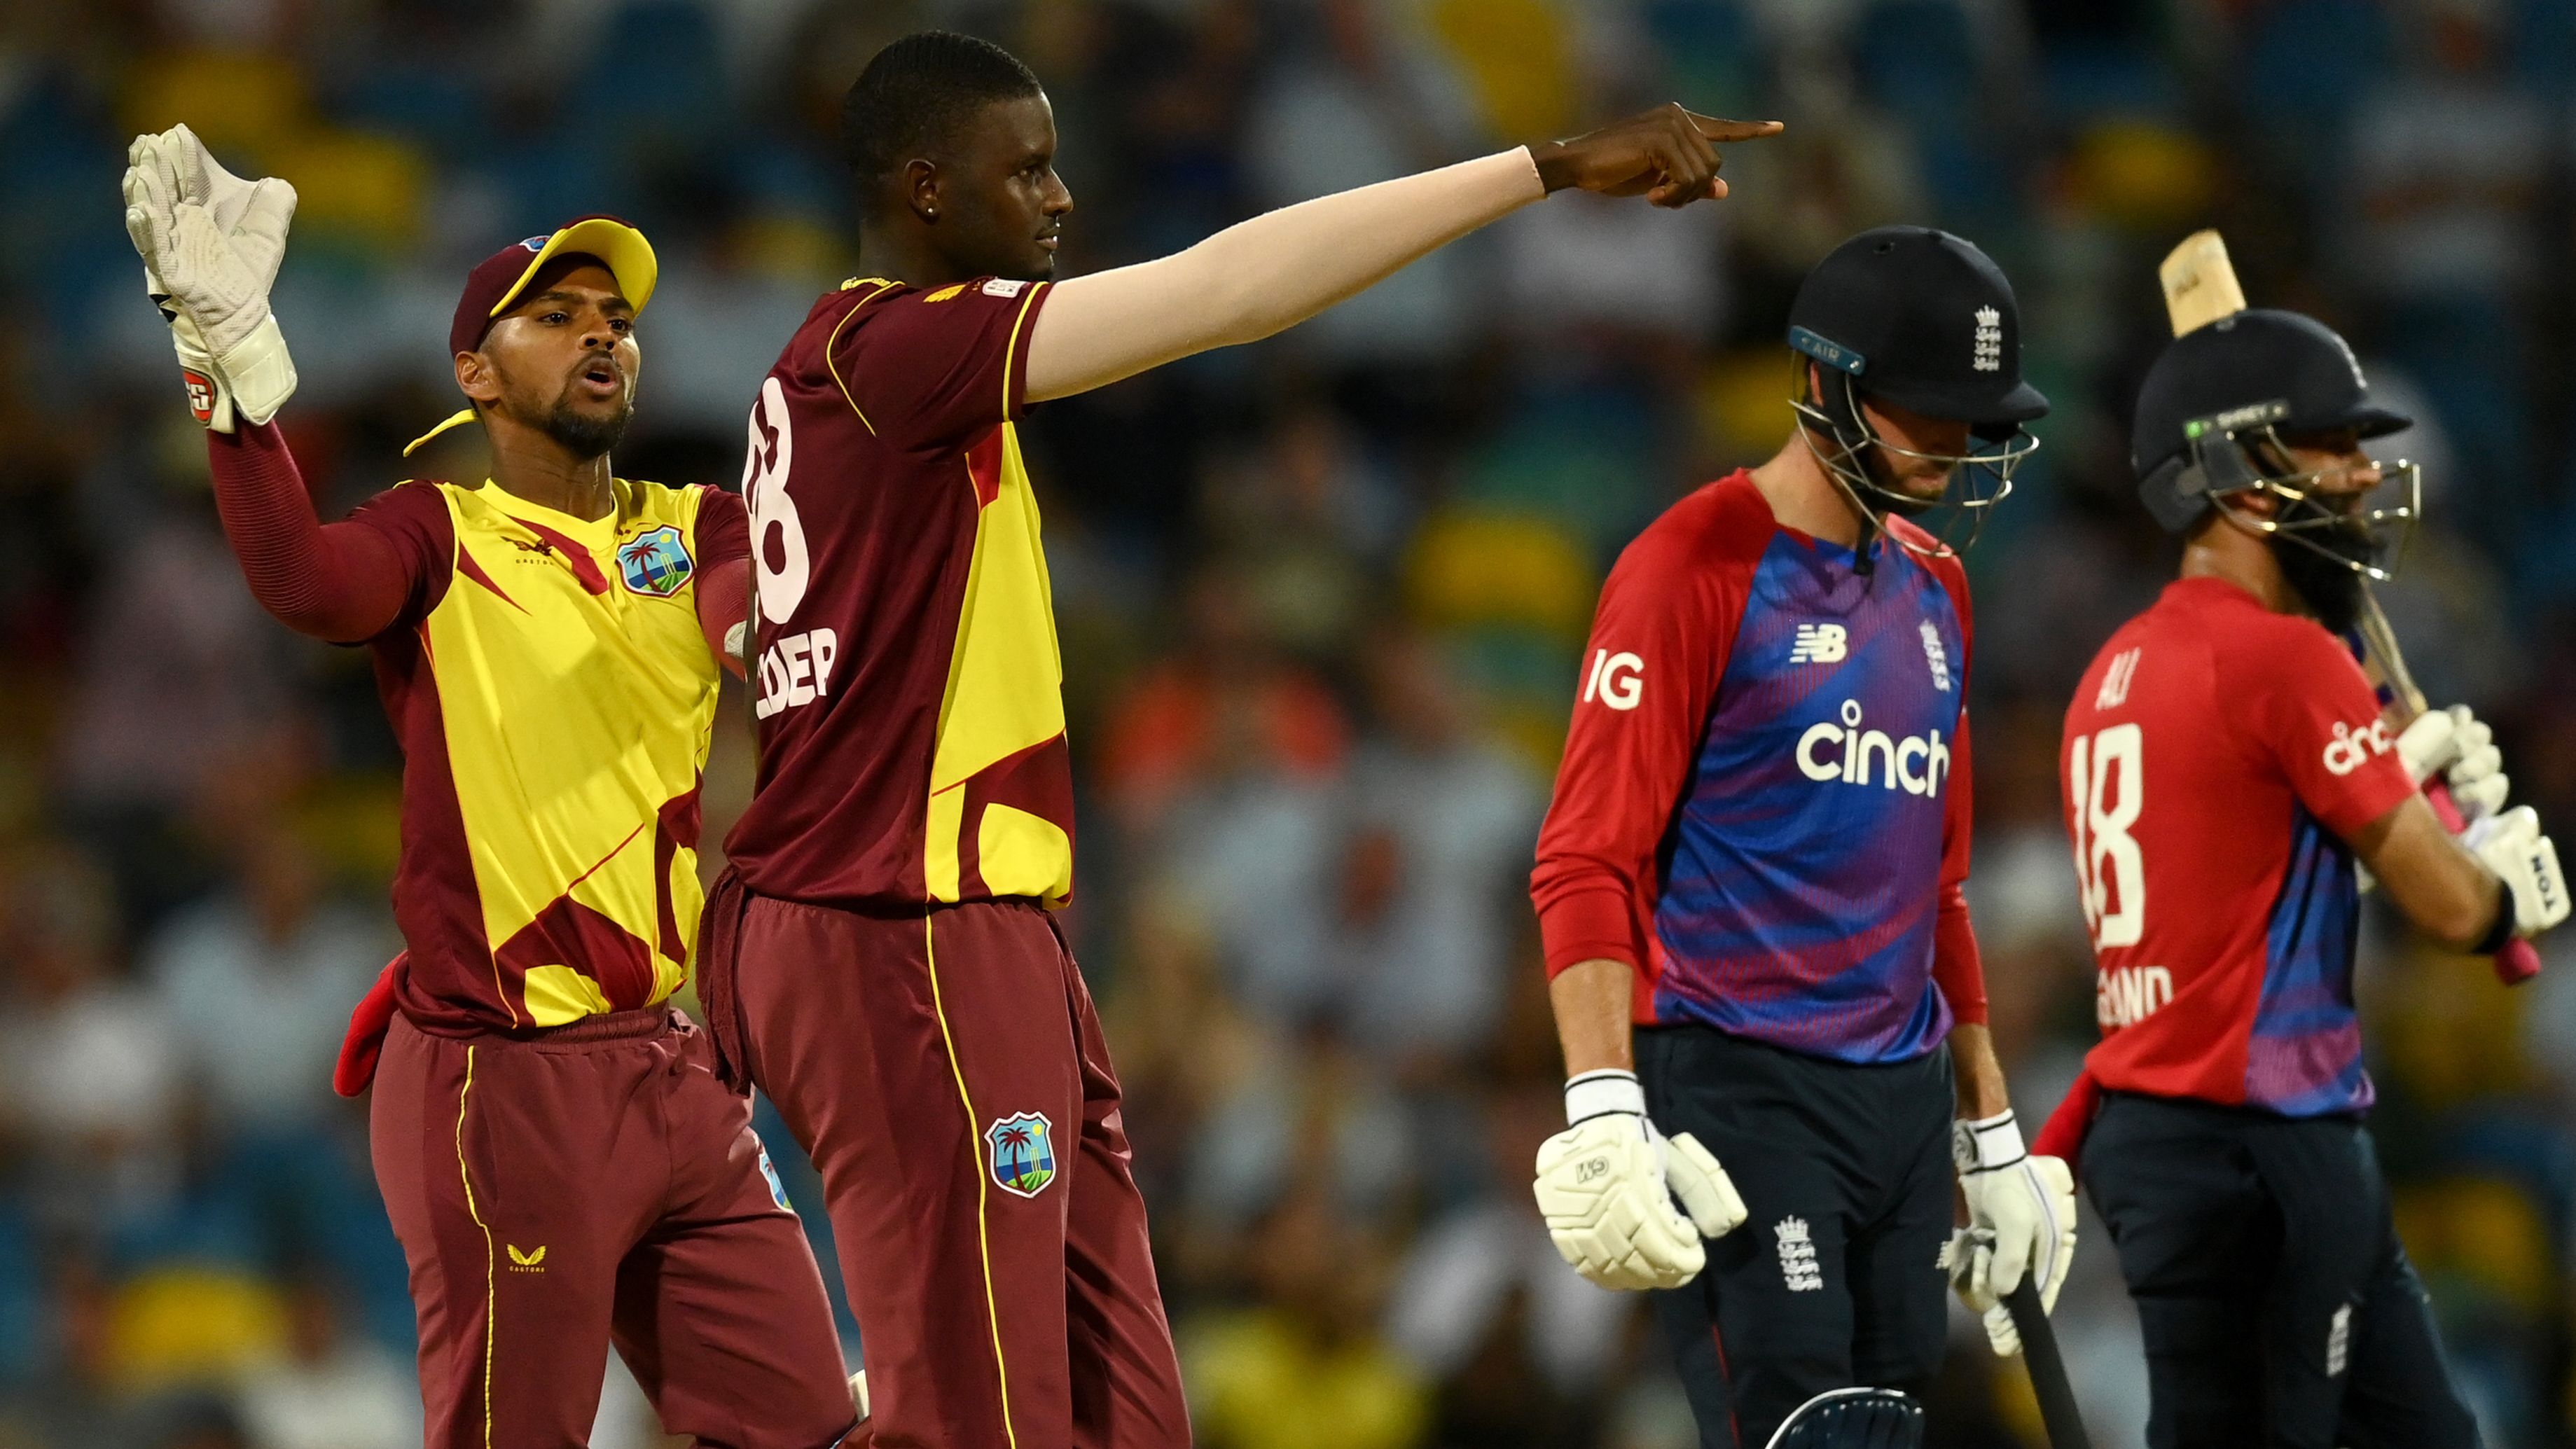 Jason Holder of the West Indies celebrates dismissing England captain Moeen Ali.